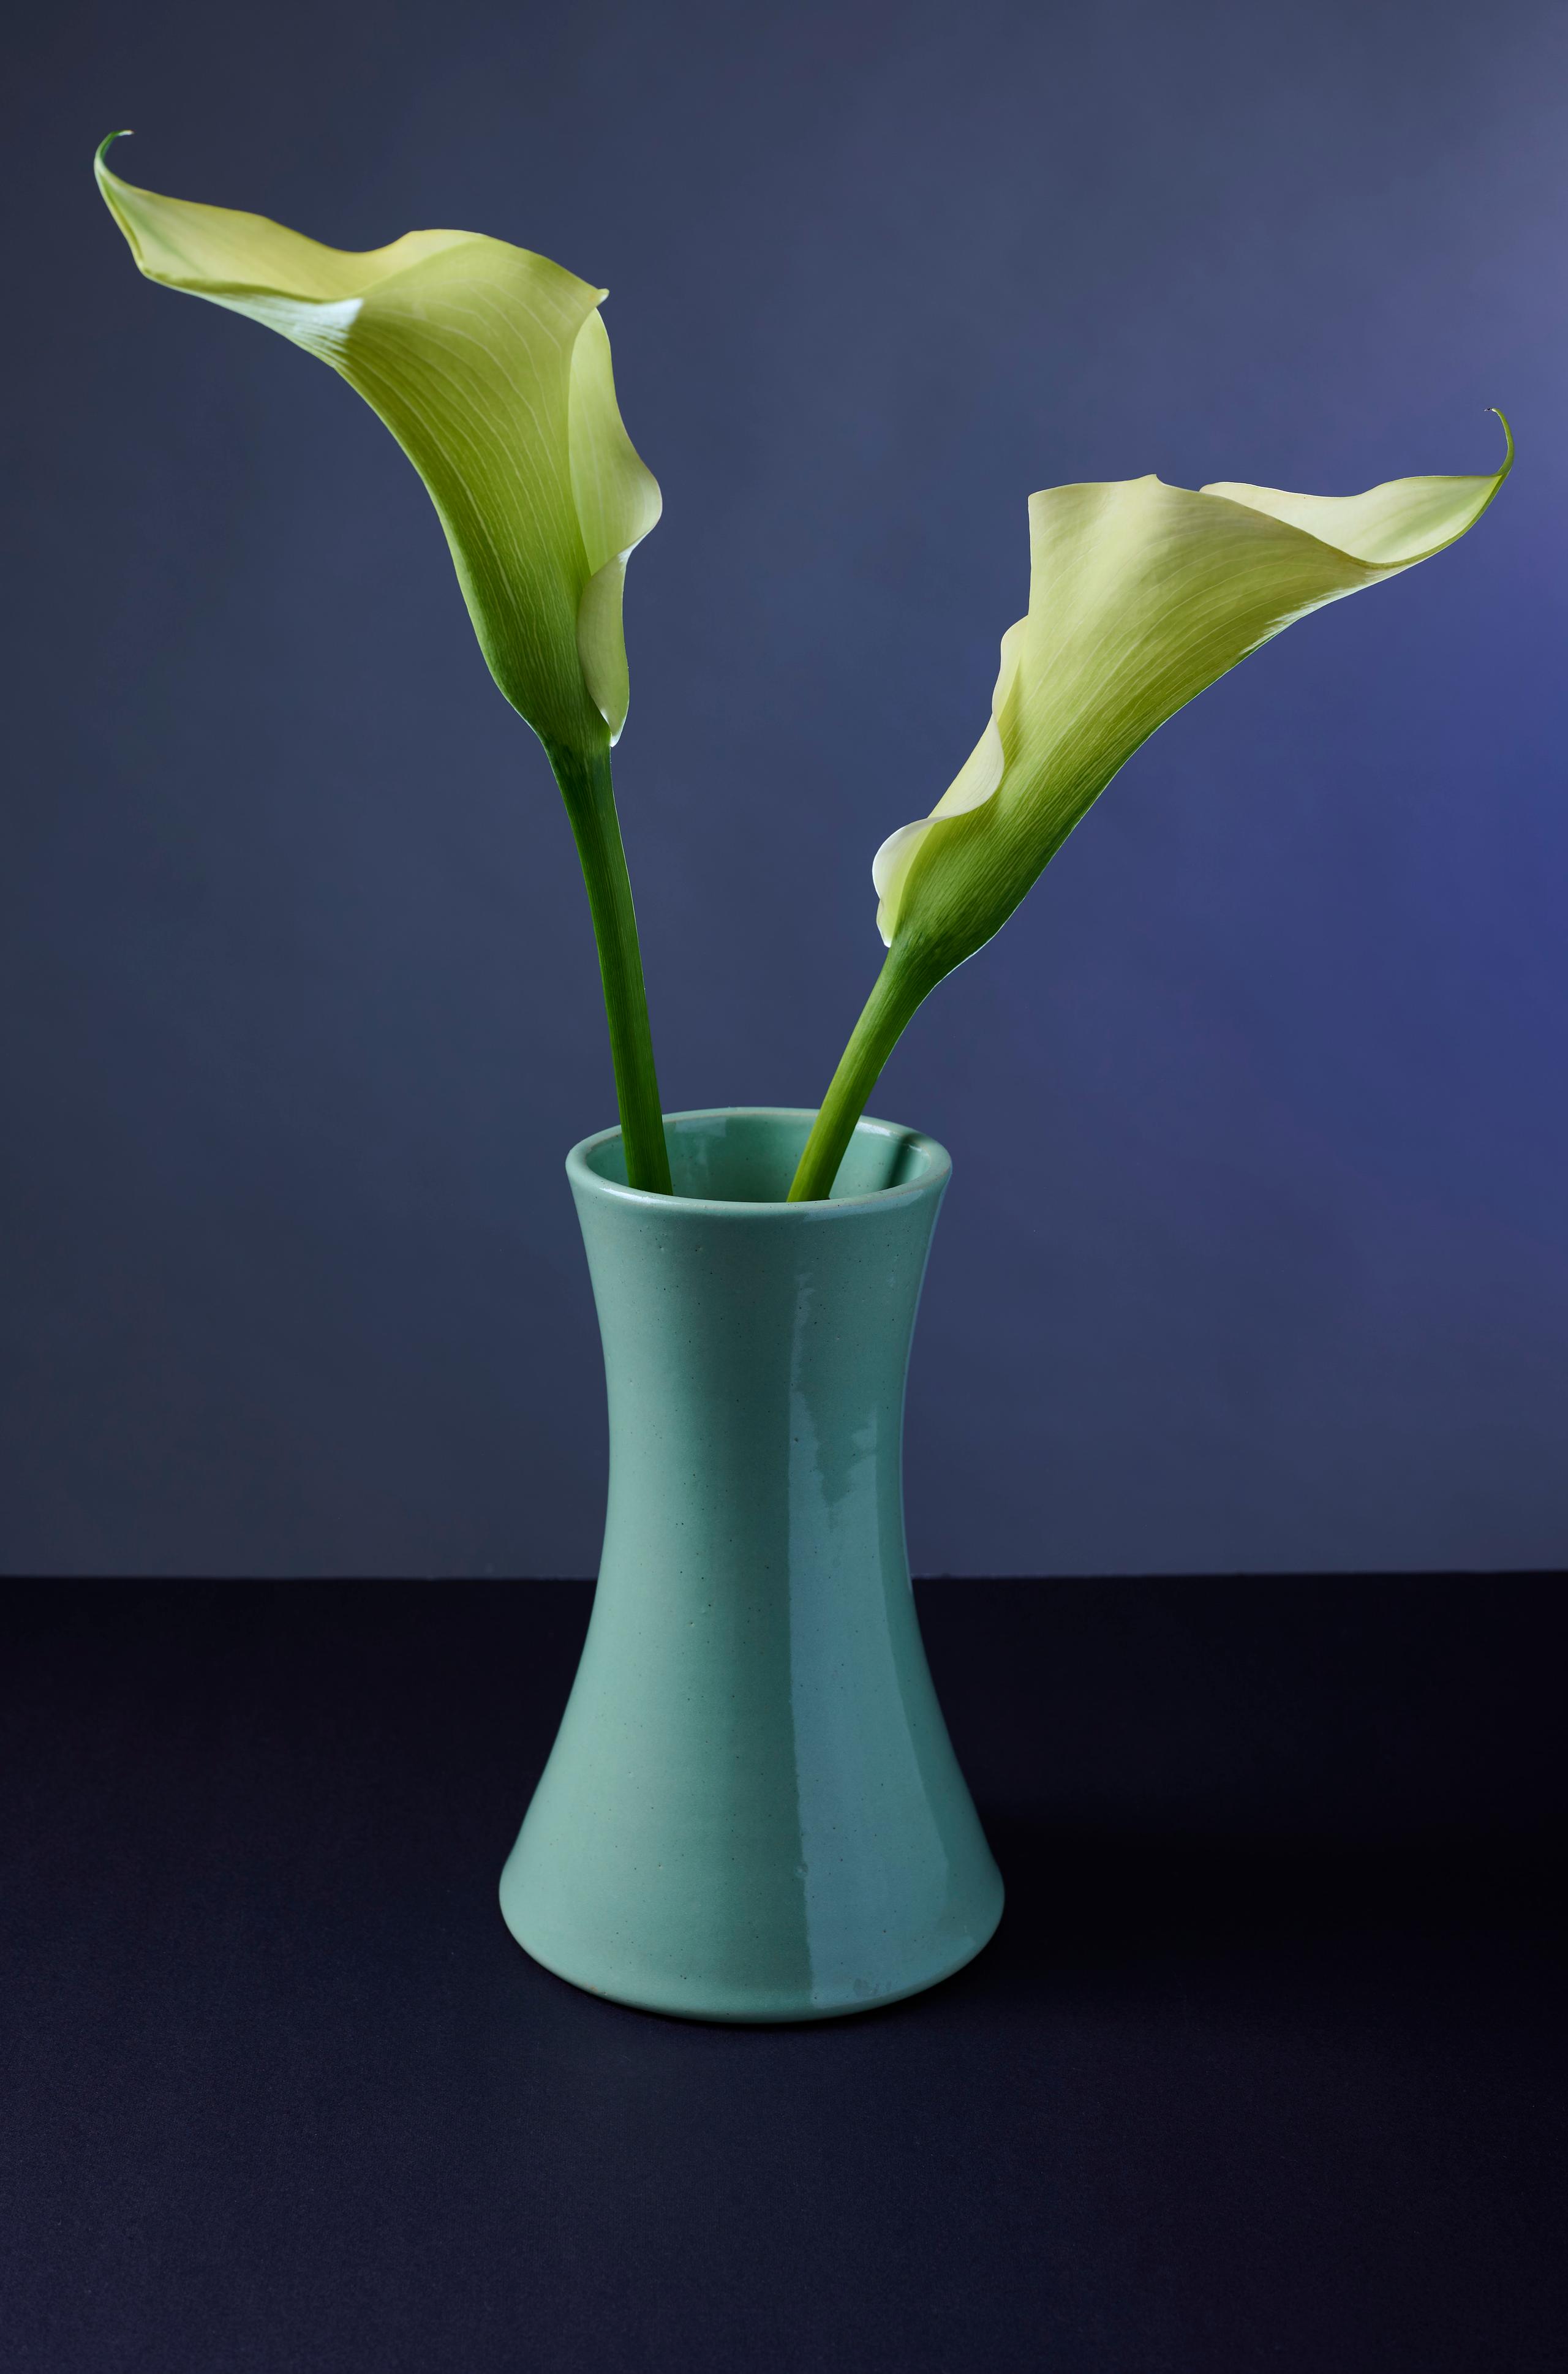 Photo Art No.2 Lilies in Vase. 20x13 inch.